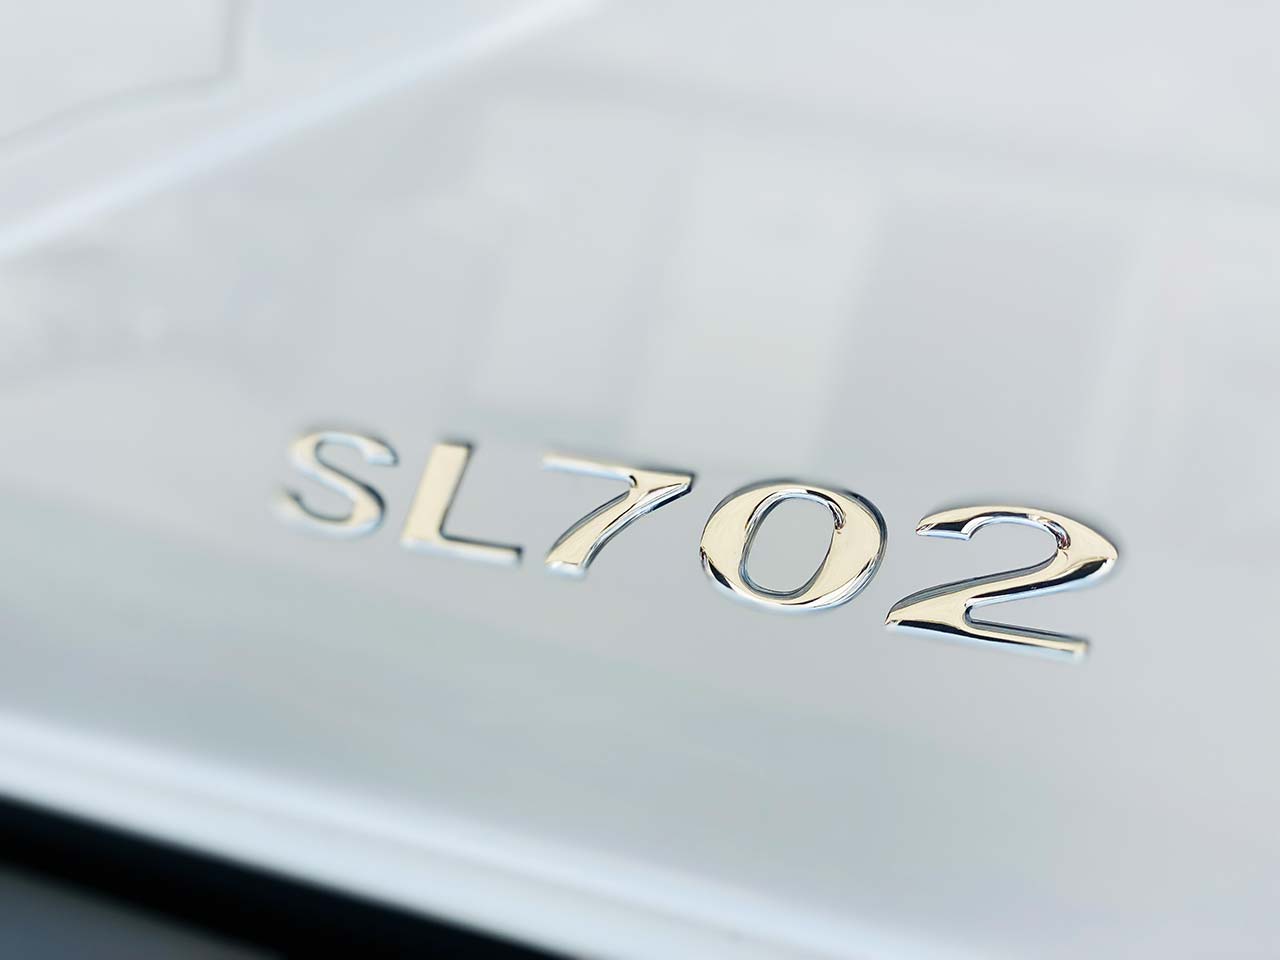 Karnic SL 702 MK2 standard features 9